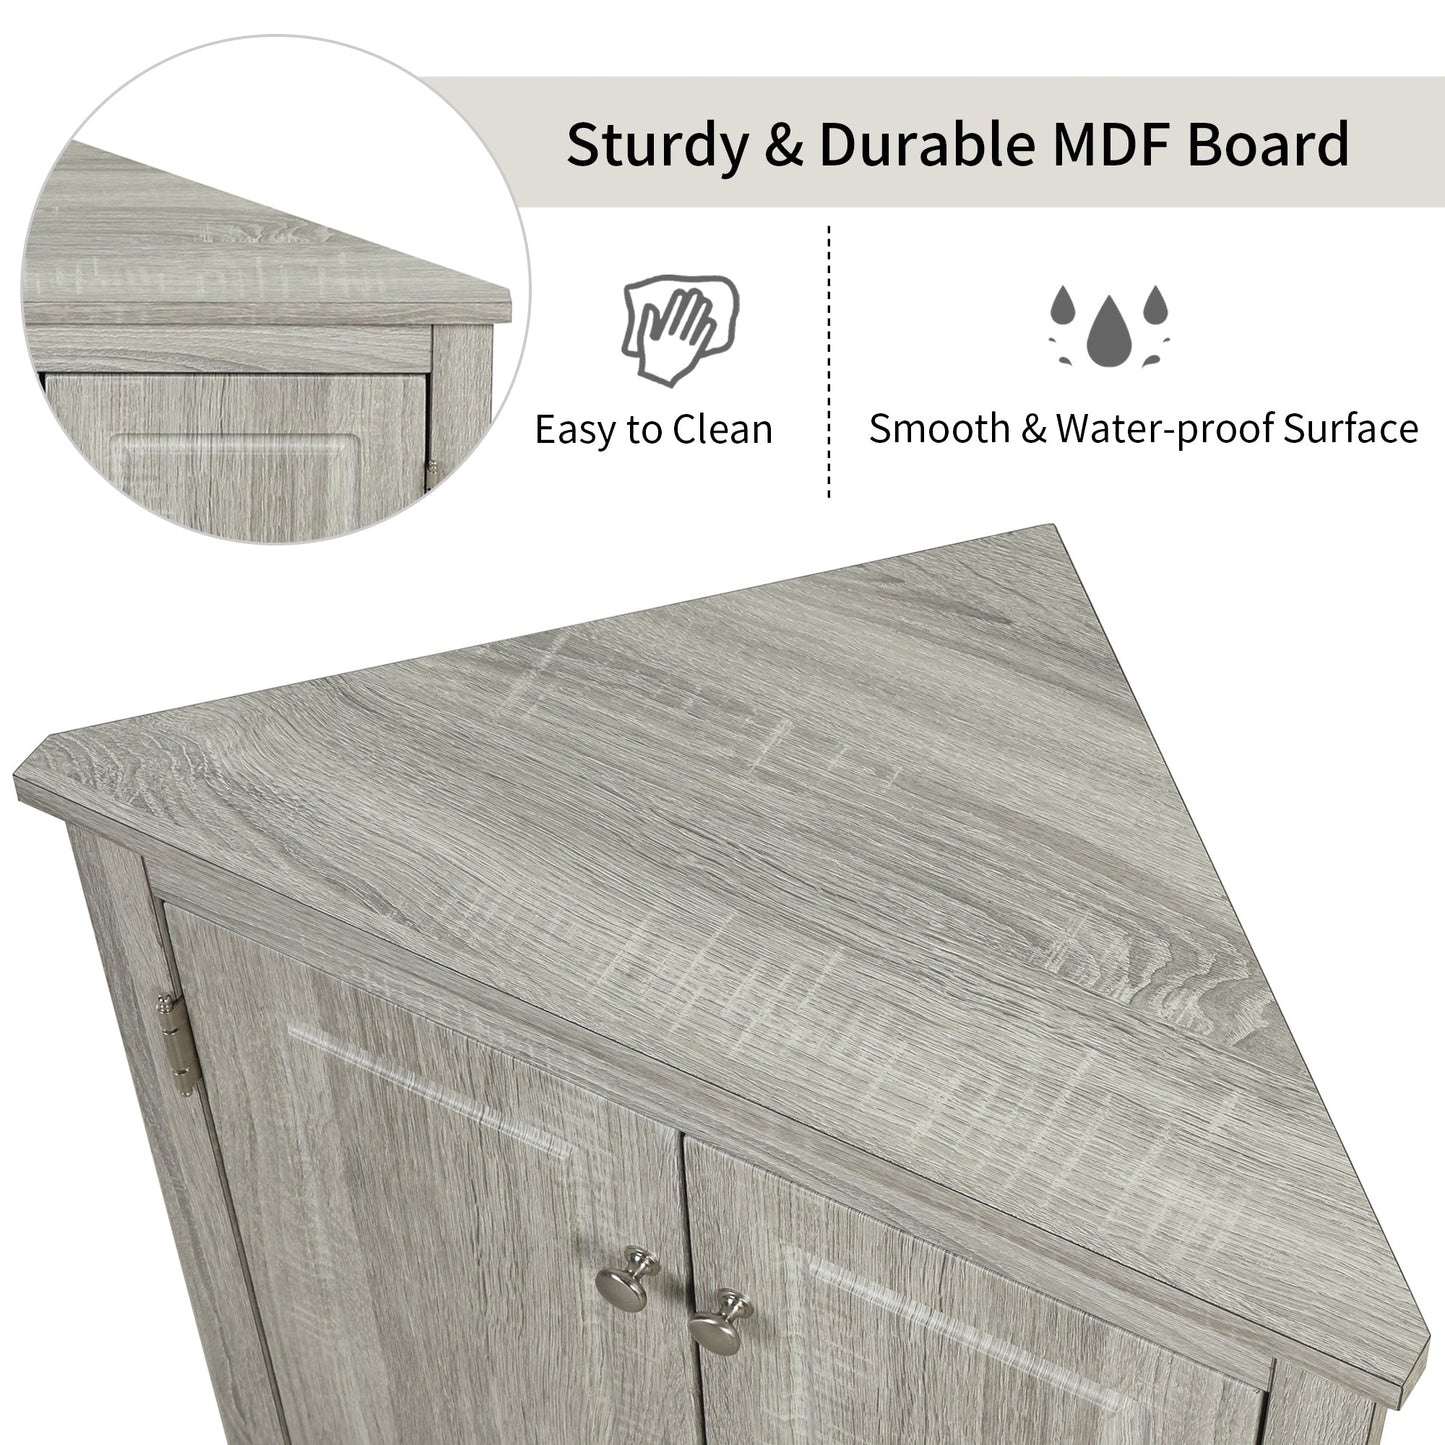 Syrause Oak Triangle Bathroom Storage Cabinet Freestanding Floor Cabinet